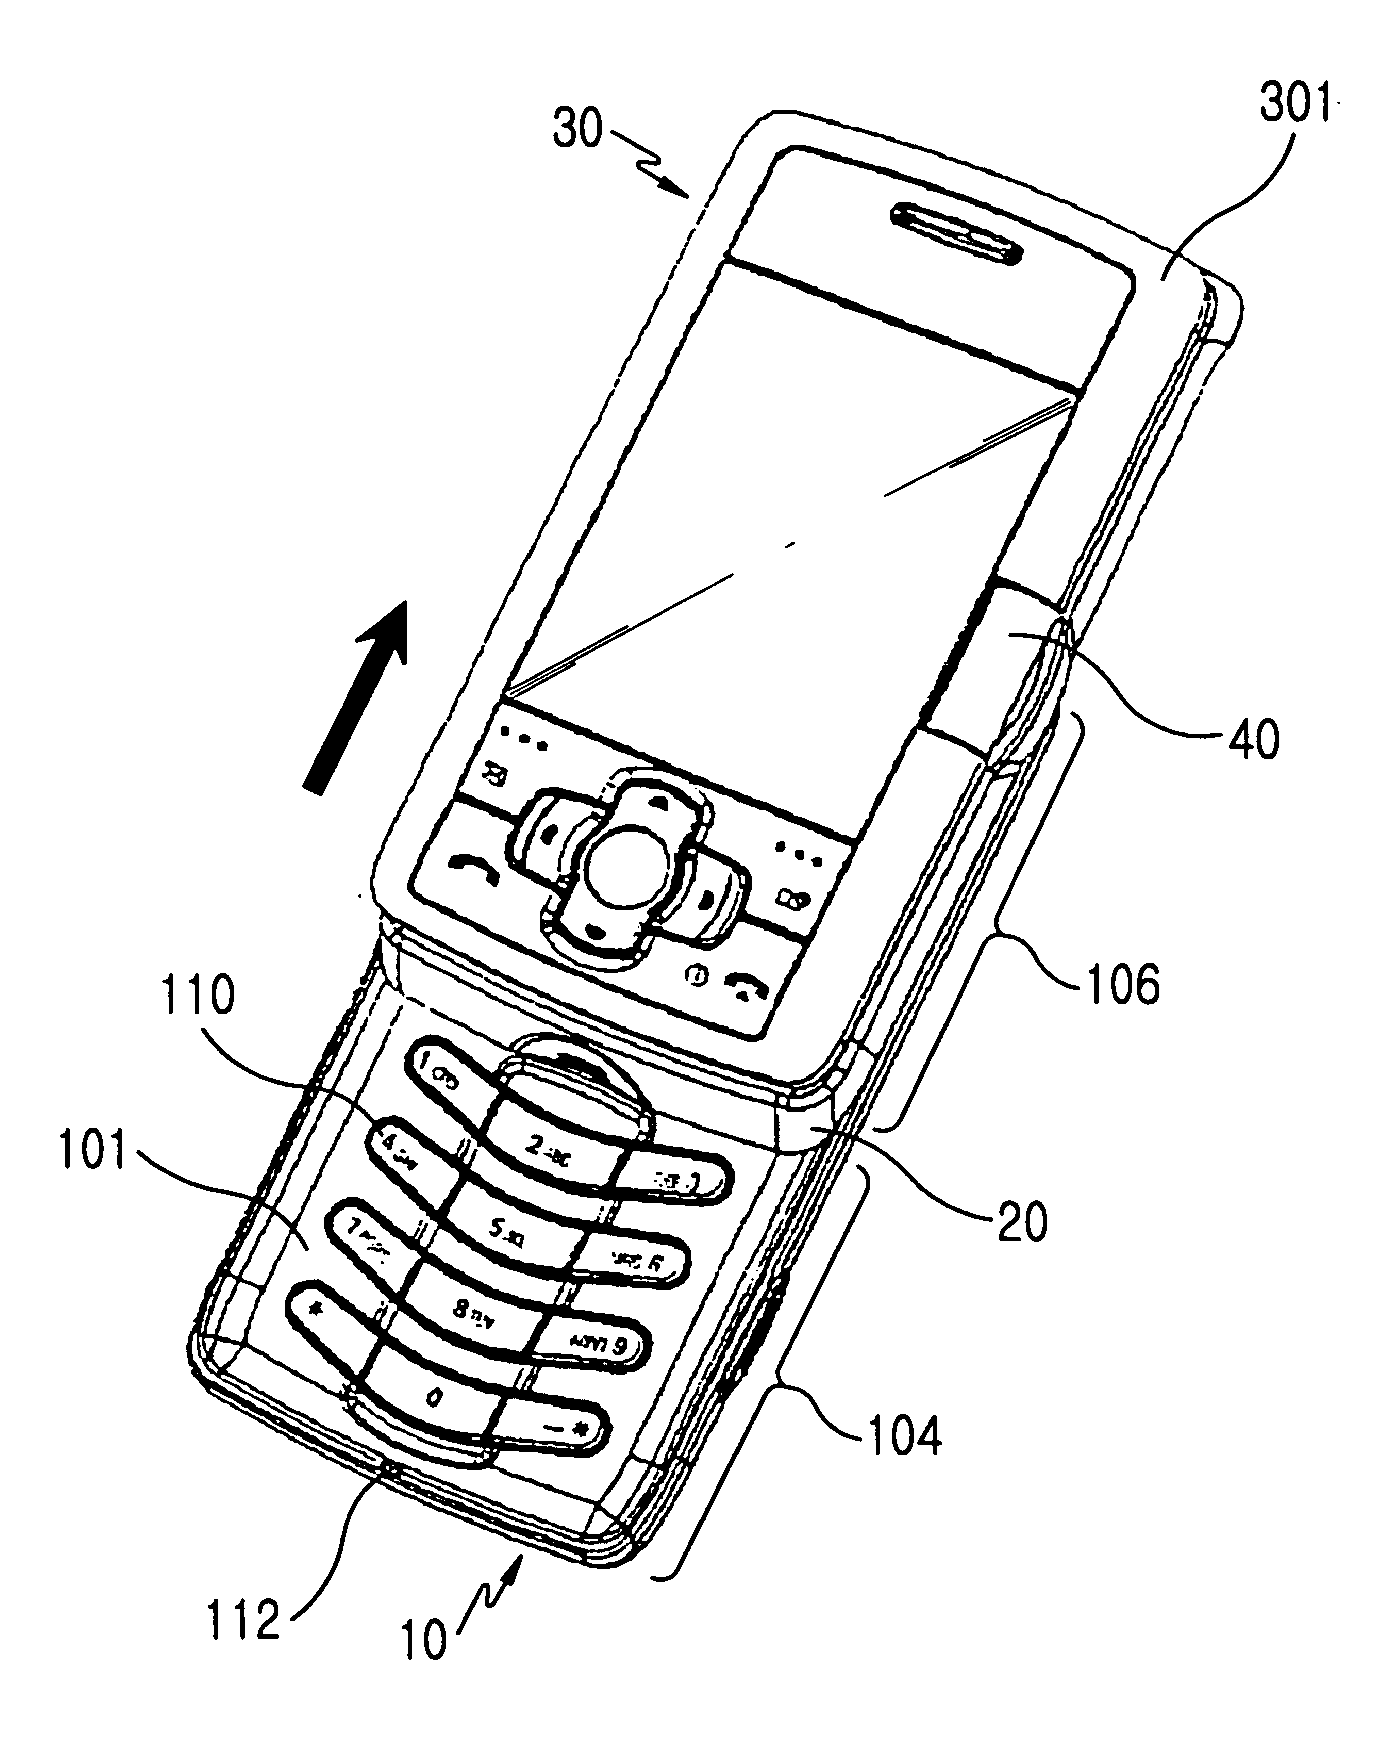 Sliding/folding-type portable apparatus